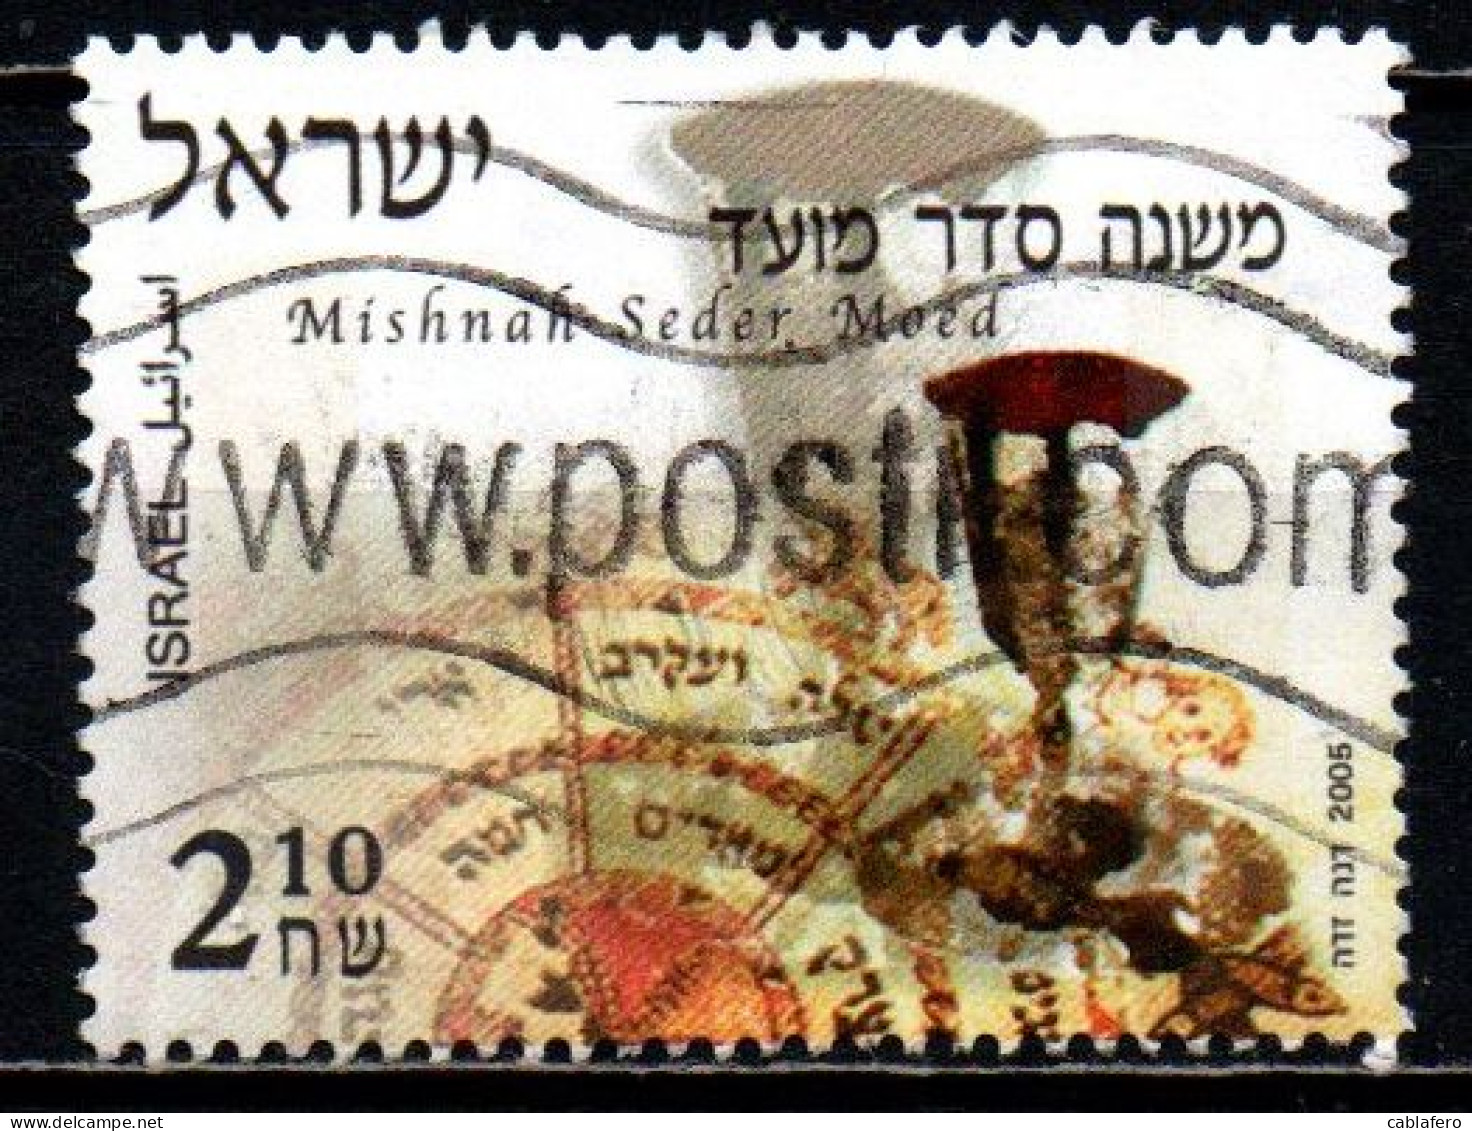 ISRAELE - 2005 - Orders Of The Mishnah - Moed - USATO - Gebraucht (ohne Tabs)